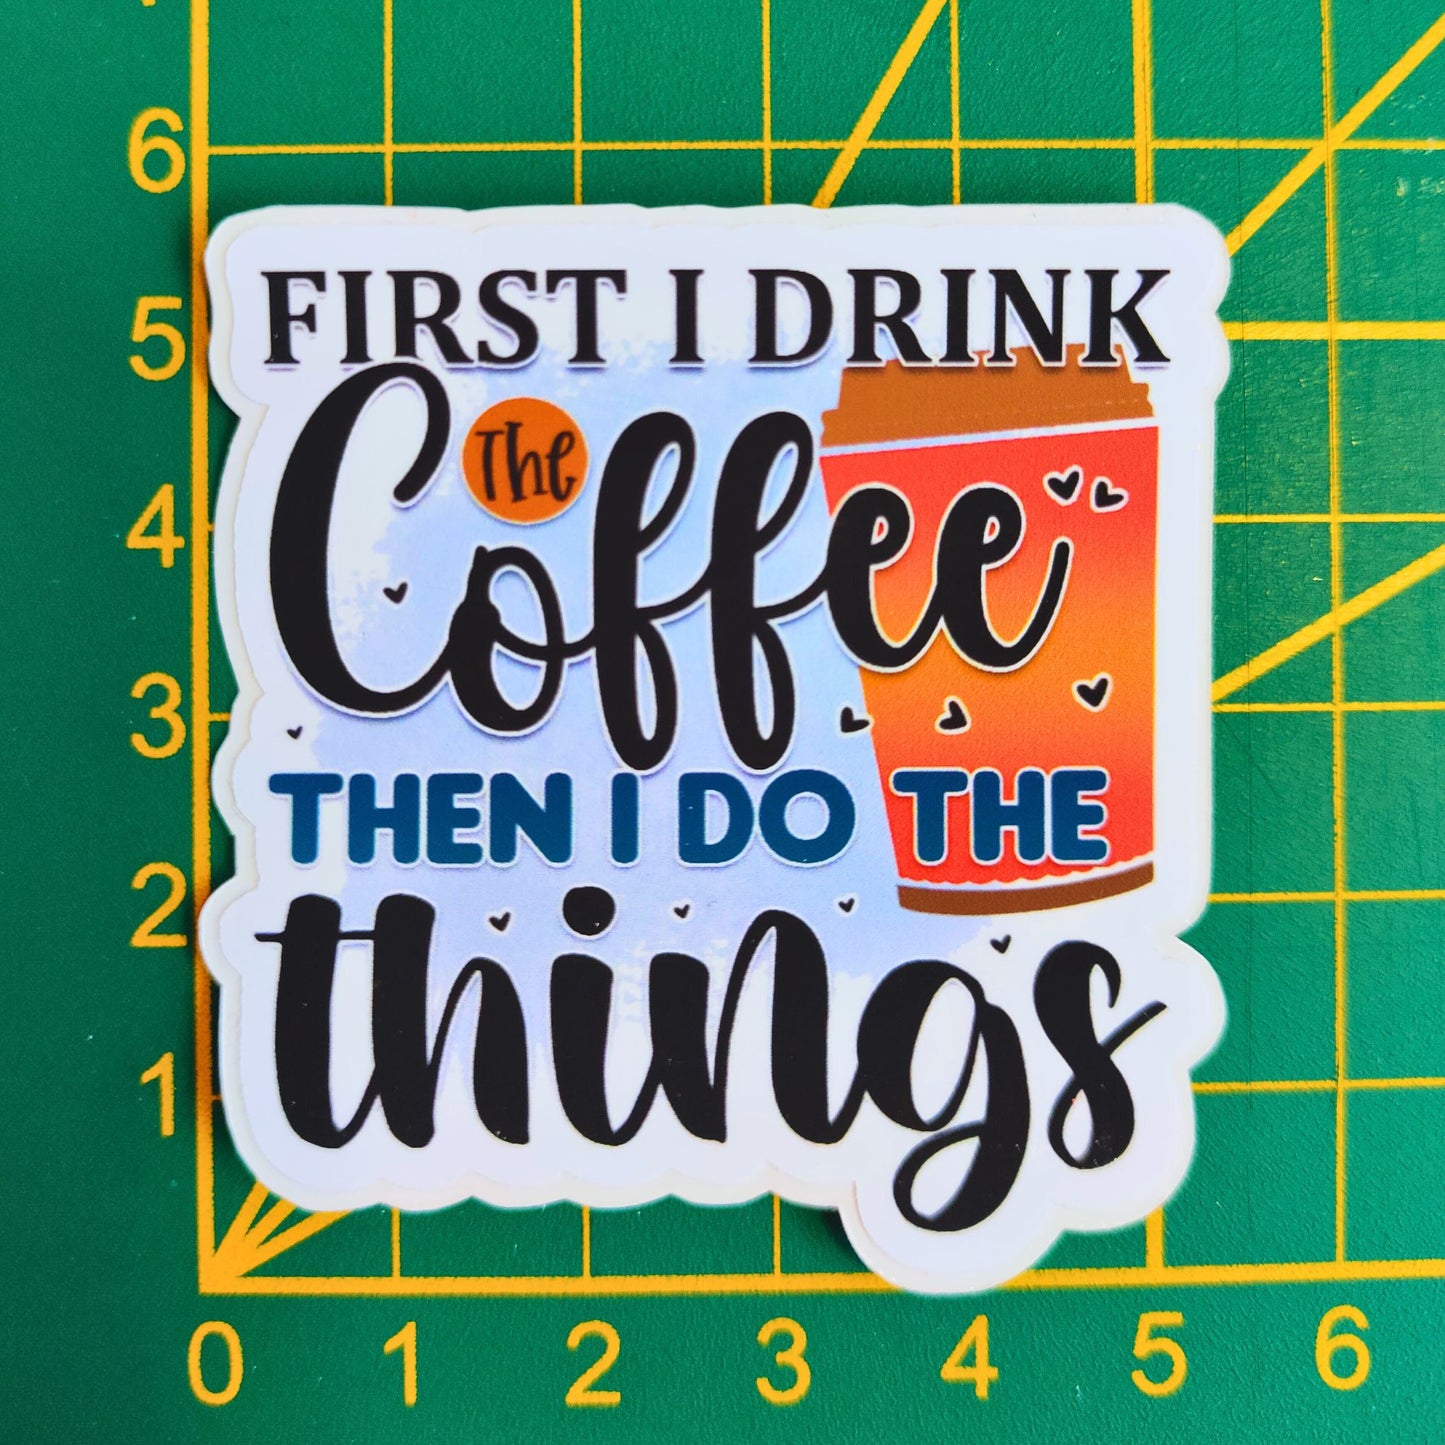 Coffee Life Addict - Die Cut Sticker